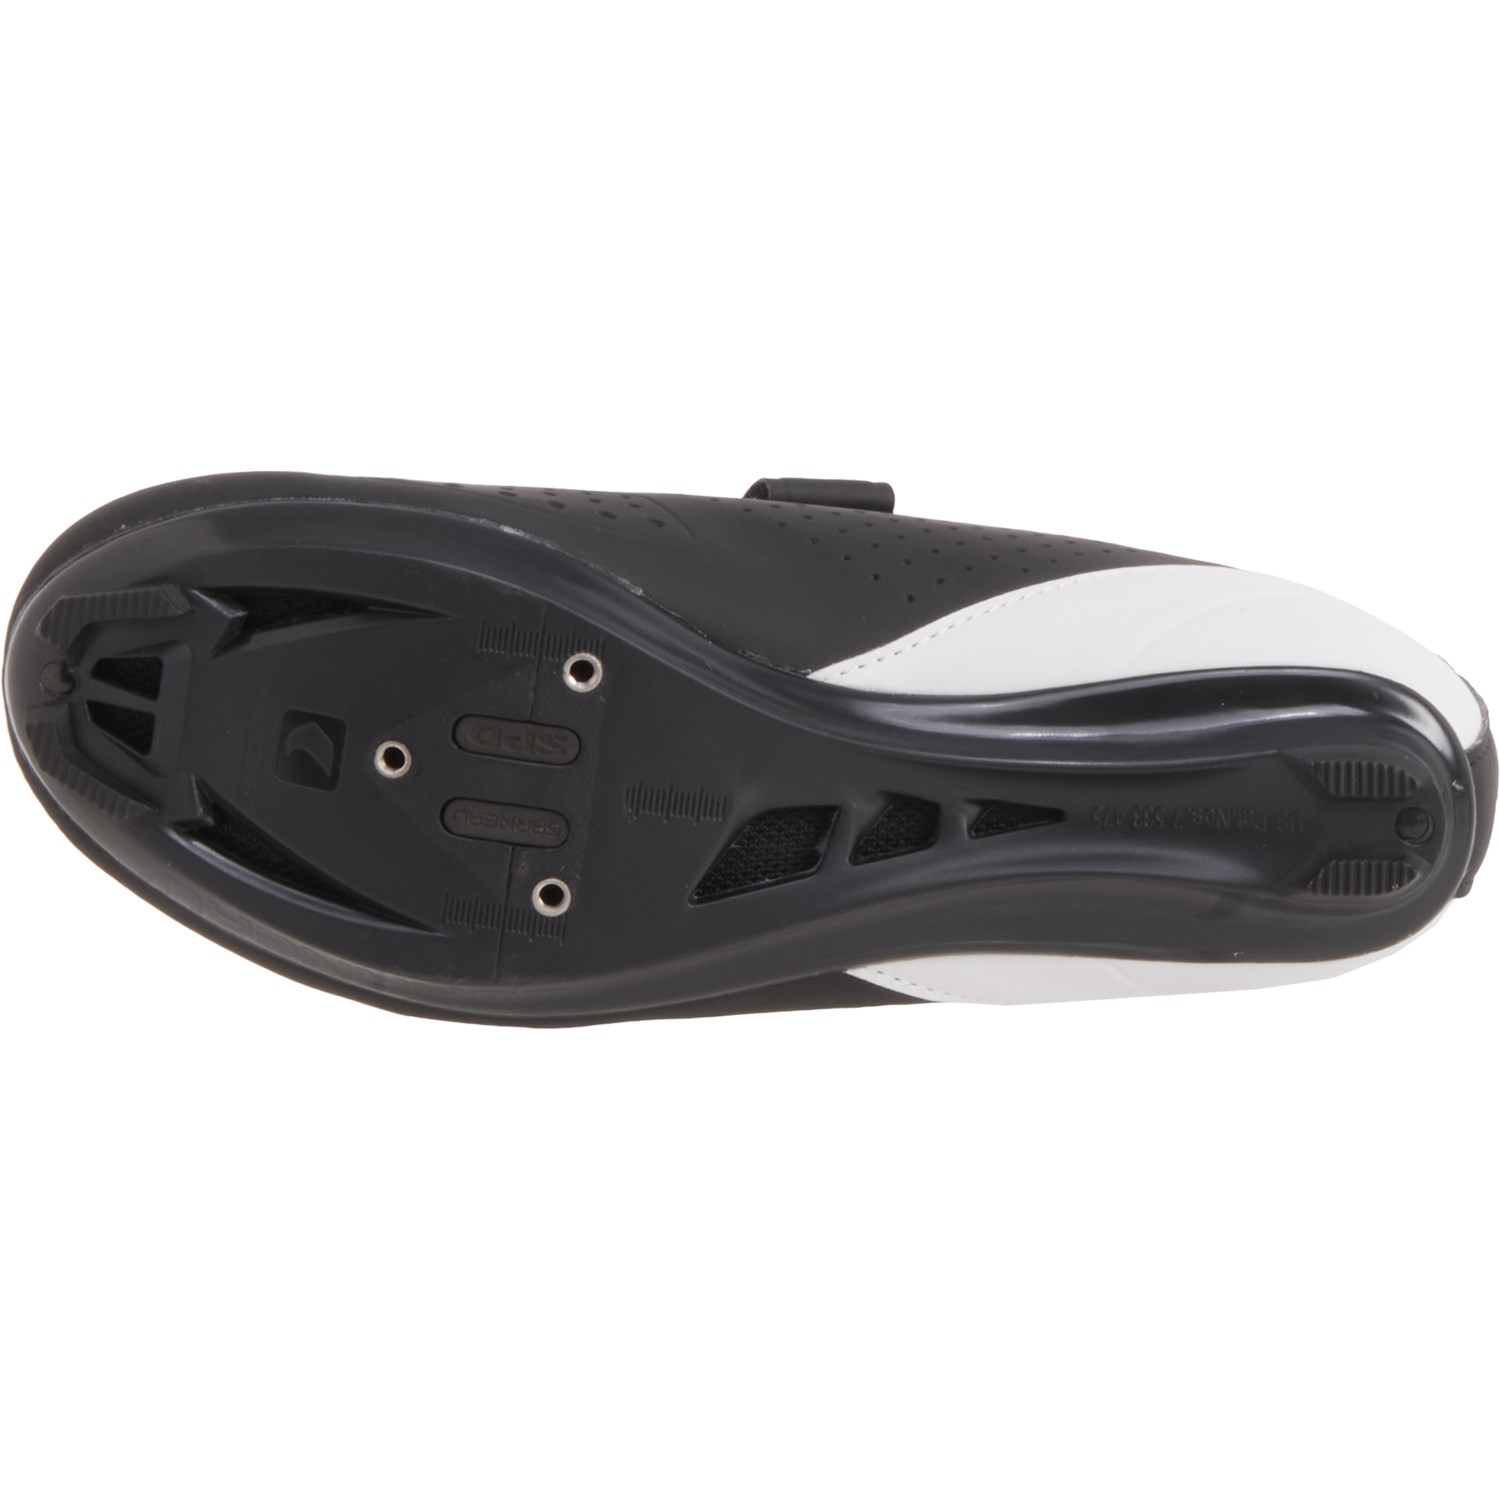 Louis Garneau HRS-80 Chrome Black Cycling Shoes Sz 5 US / EU 38 Ergo Air